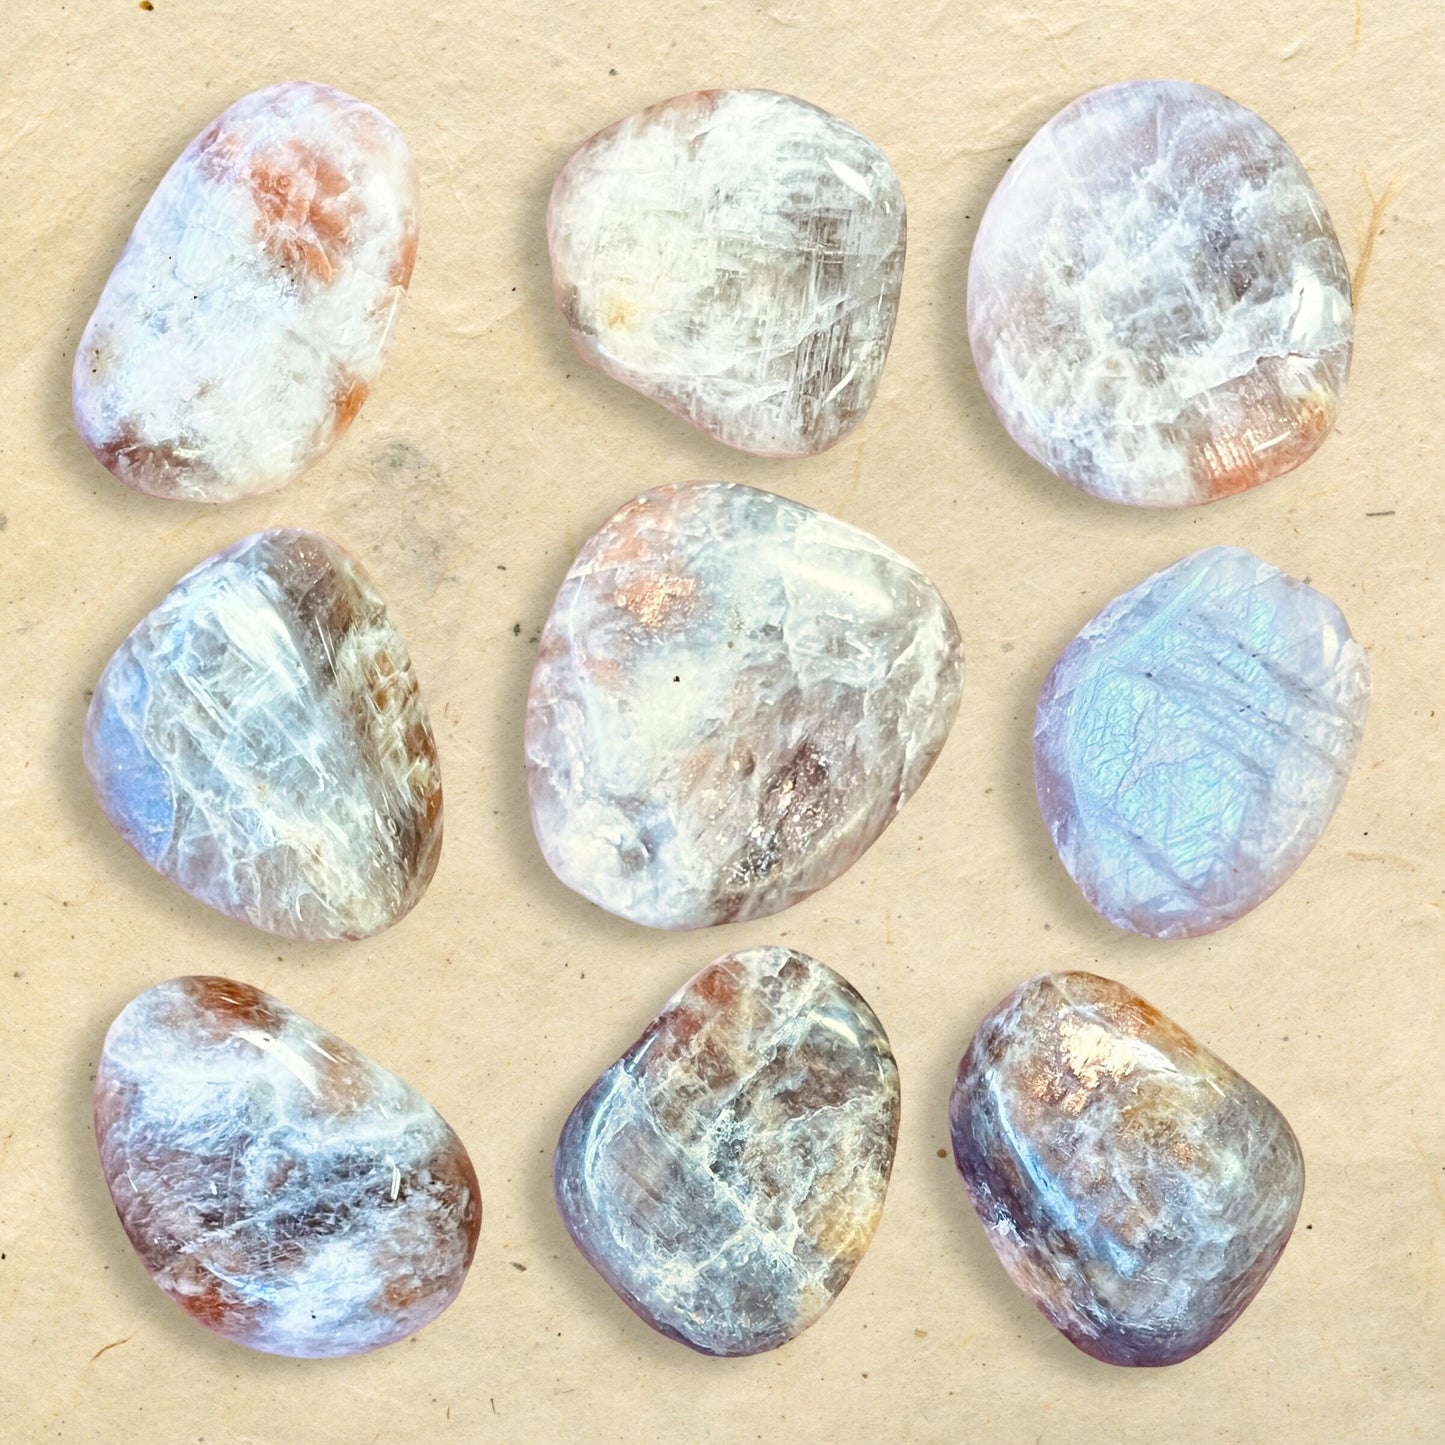 Belomorite Sunstone in Moonstone Tumbled Crystal - You get one